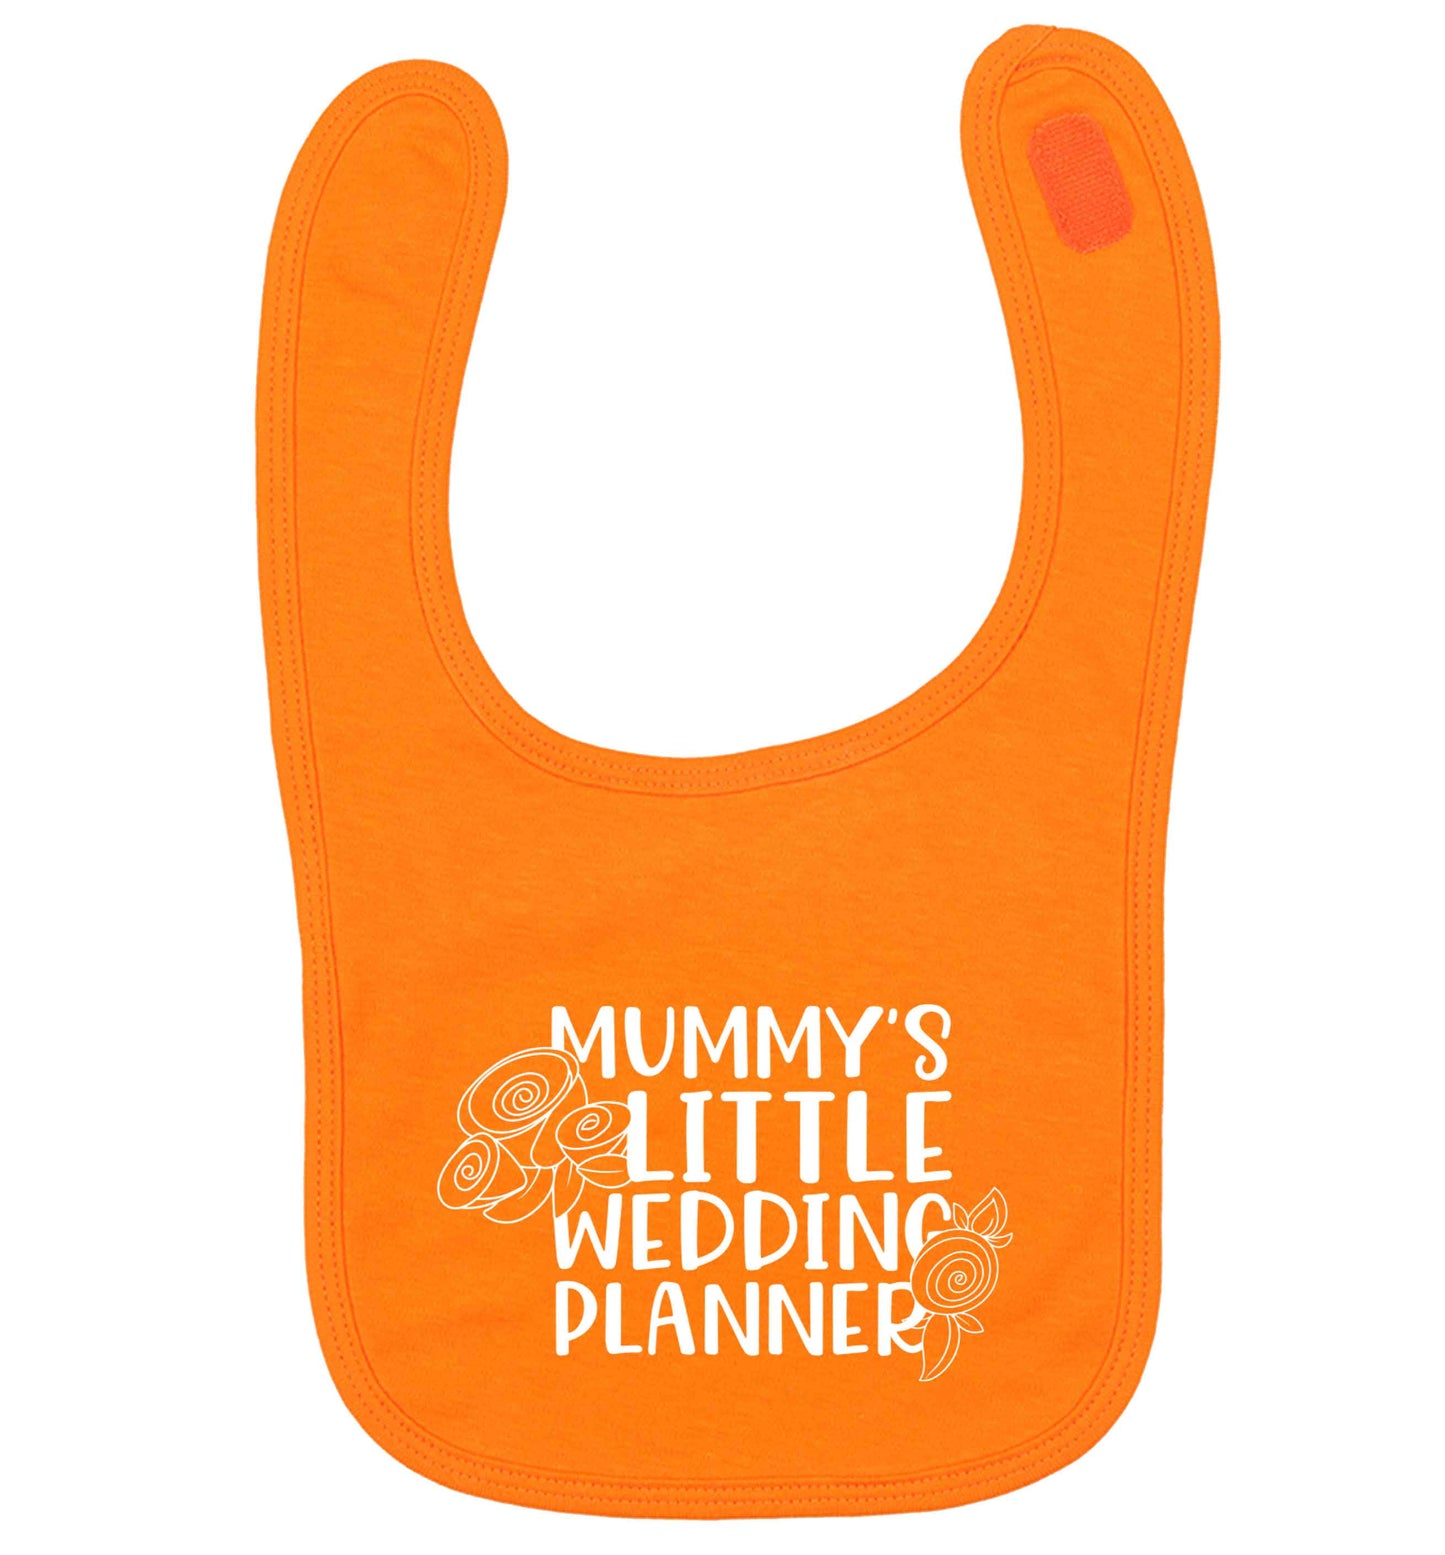 adorable wedding themed gifts for your mini wedding planner! orange baby bib